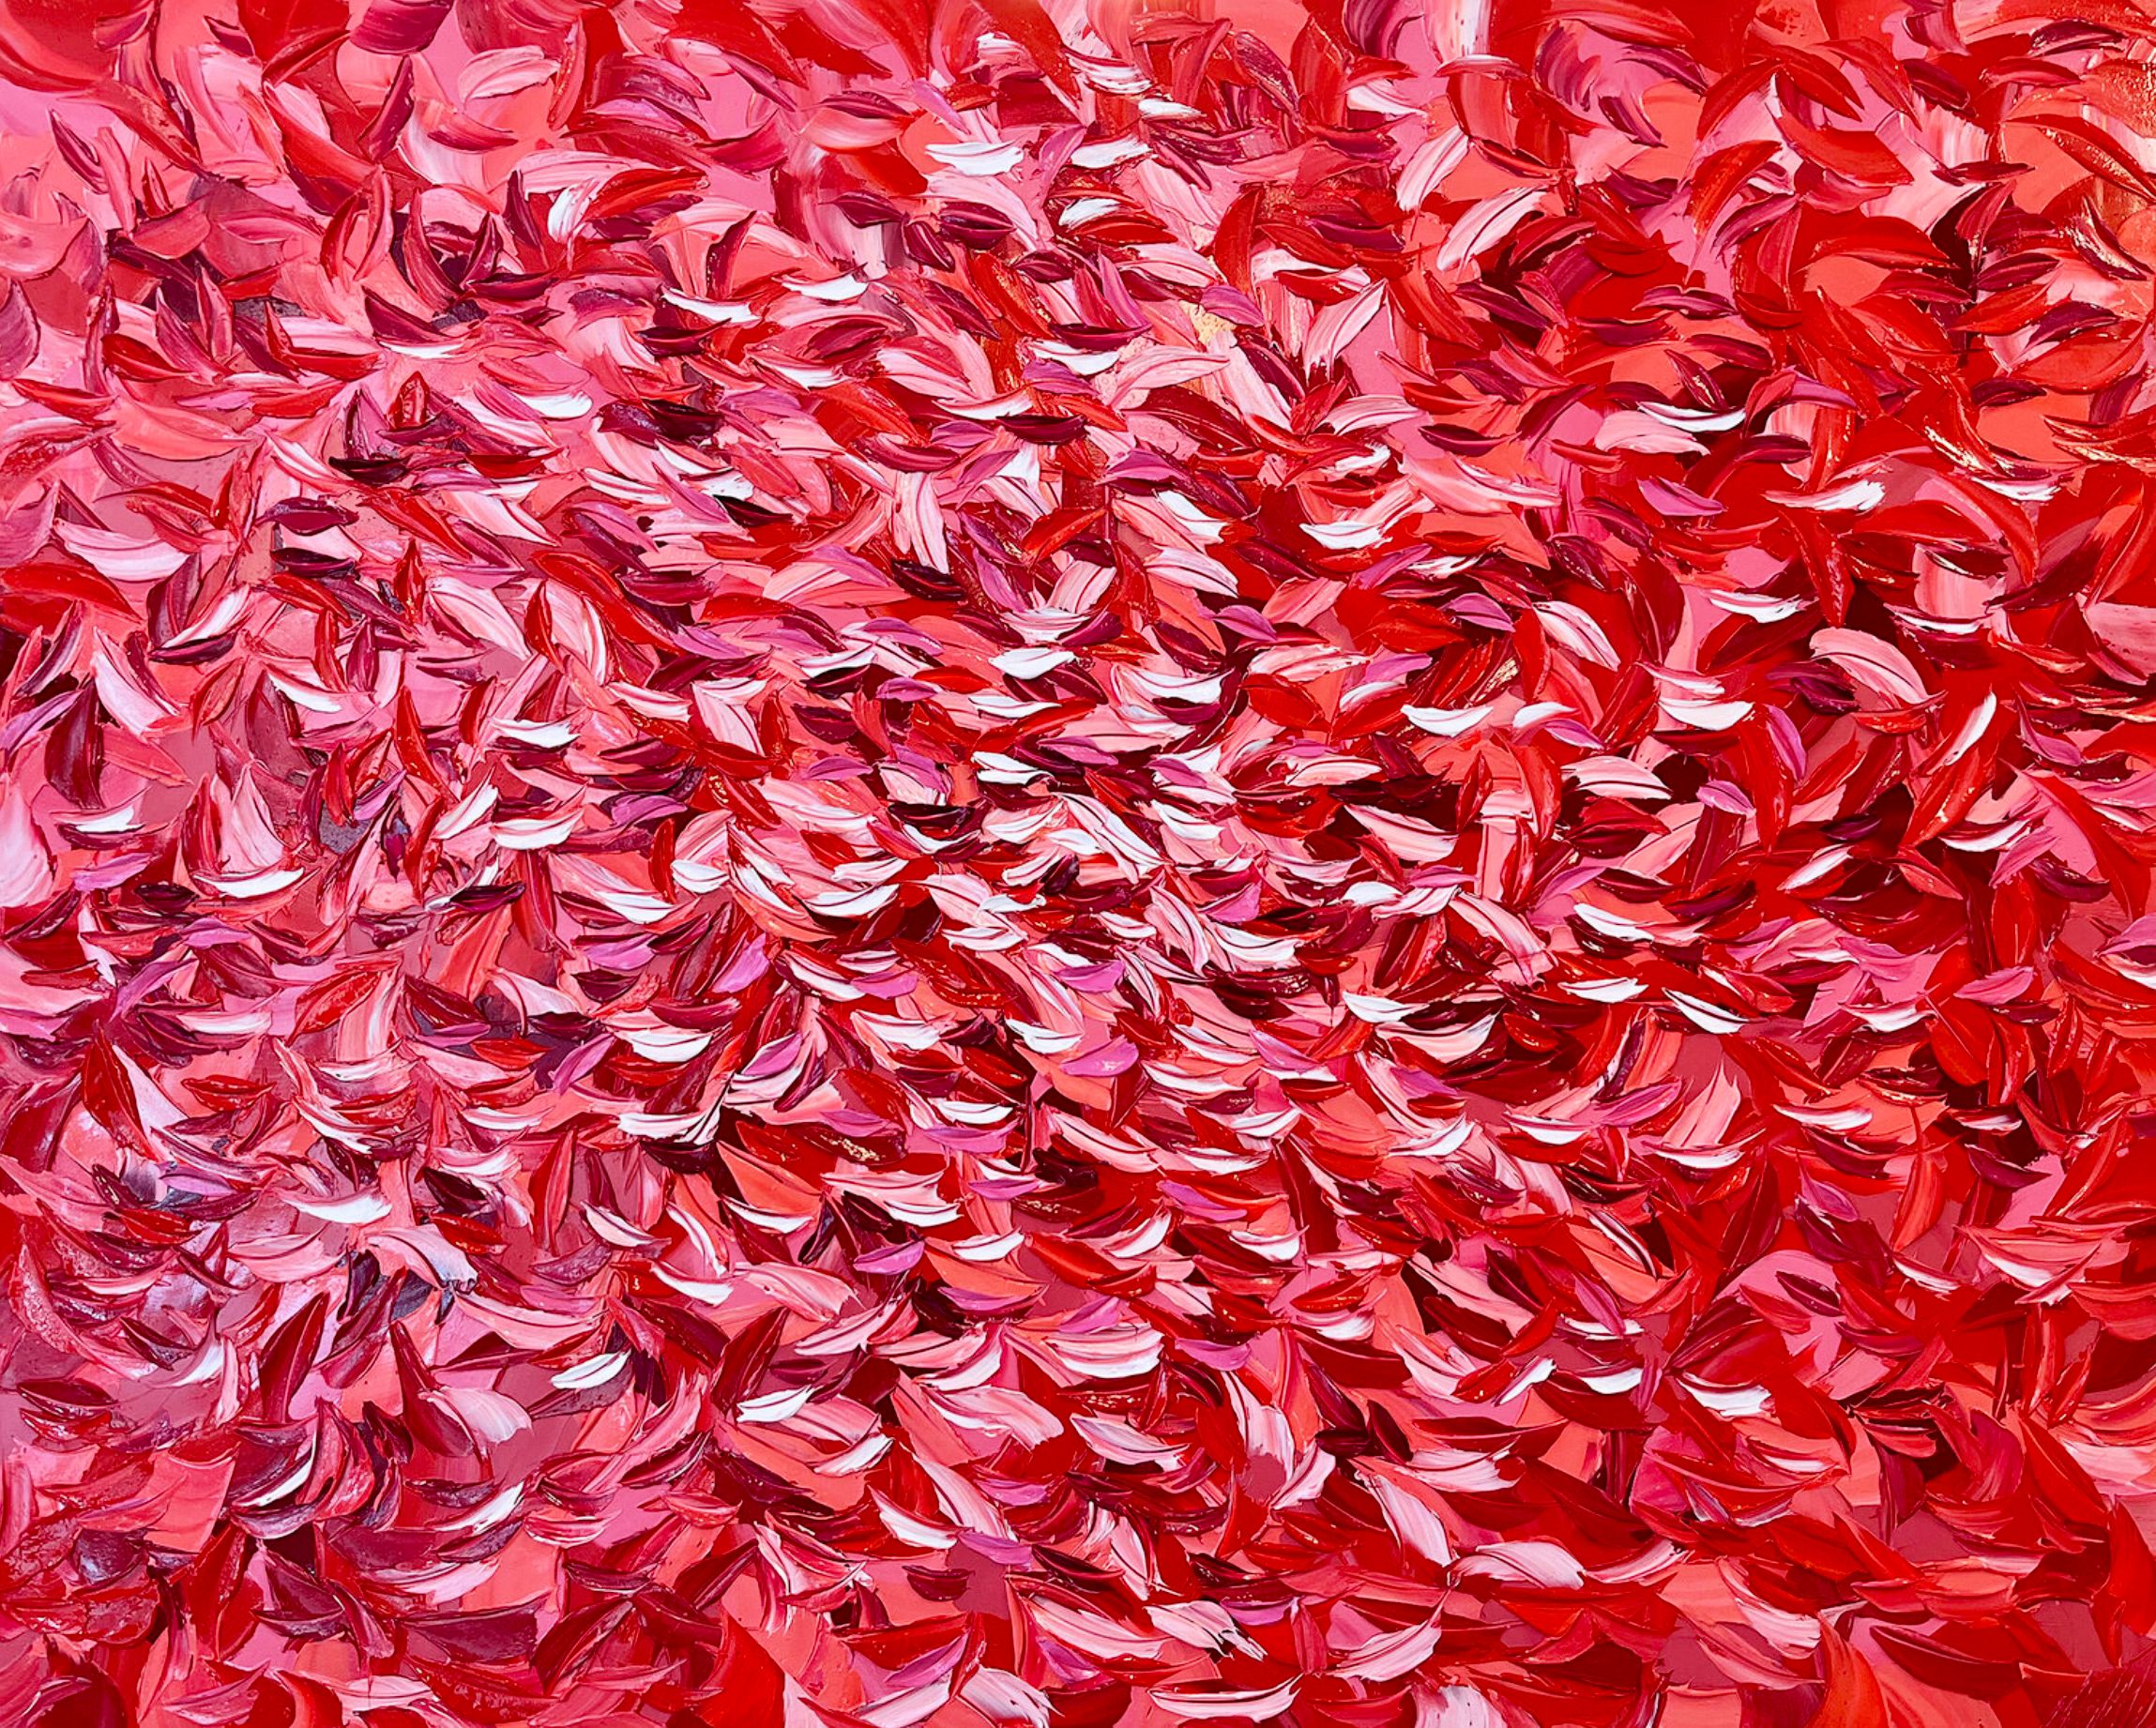 Oliver Messas "L'envolée" Abstrakte Malerei rote Blätter